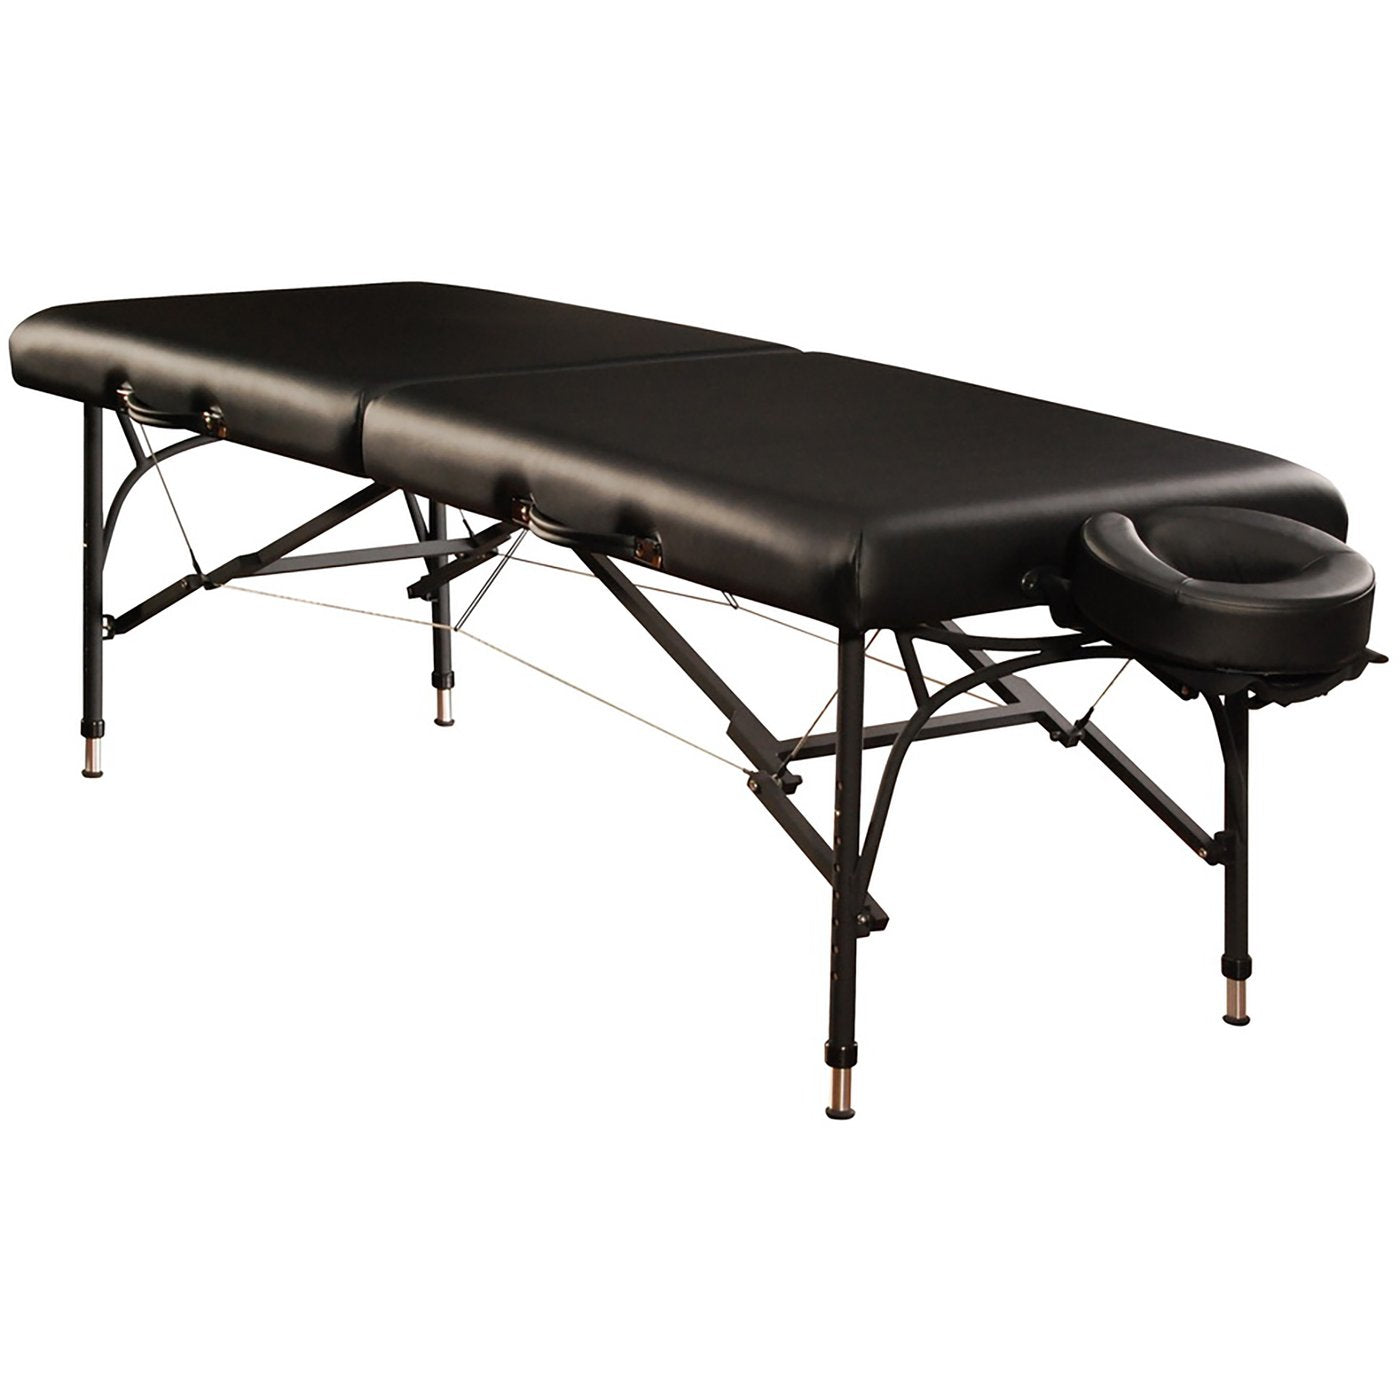 28" Violet Portable Aluminum Lightweight Portable Massage Table Package Black